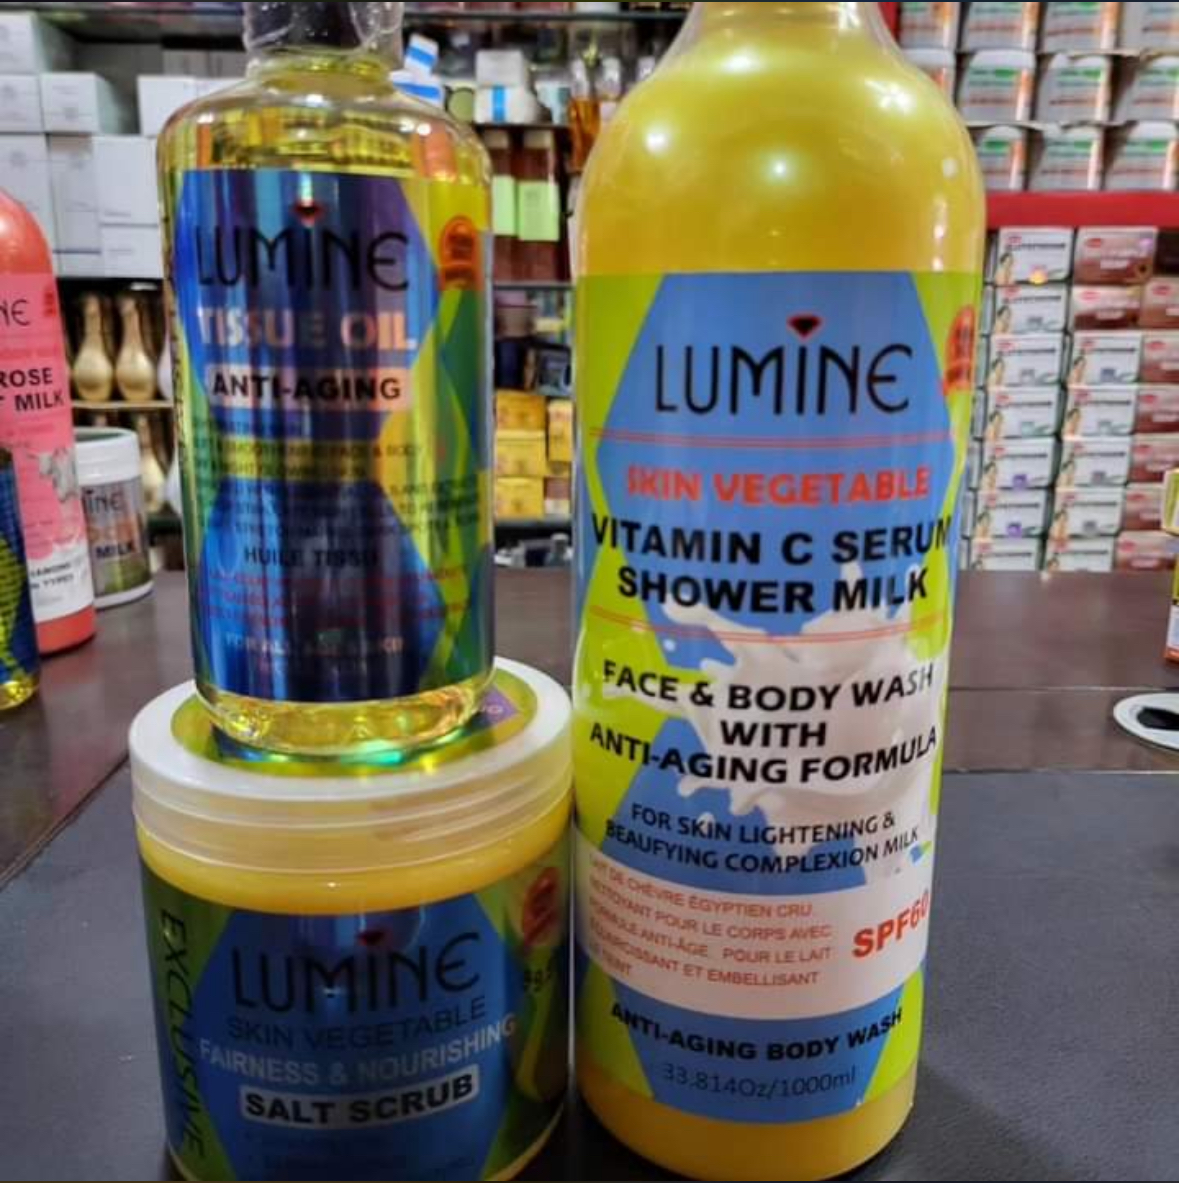 Lumine Vit C Super Lightening , Glow & Toning Set oil + Scrub + Body Wash